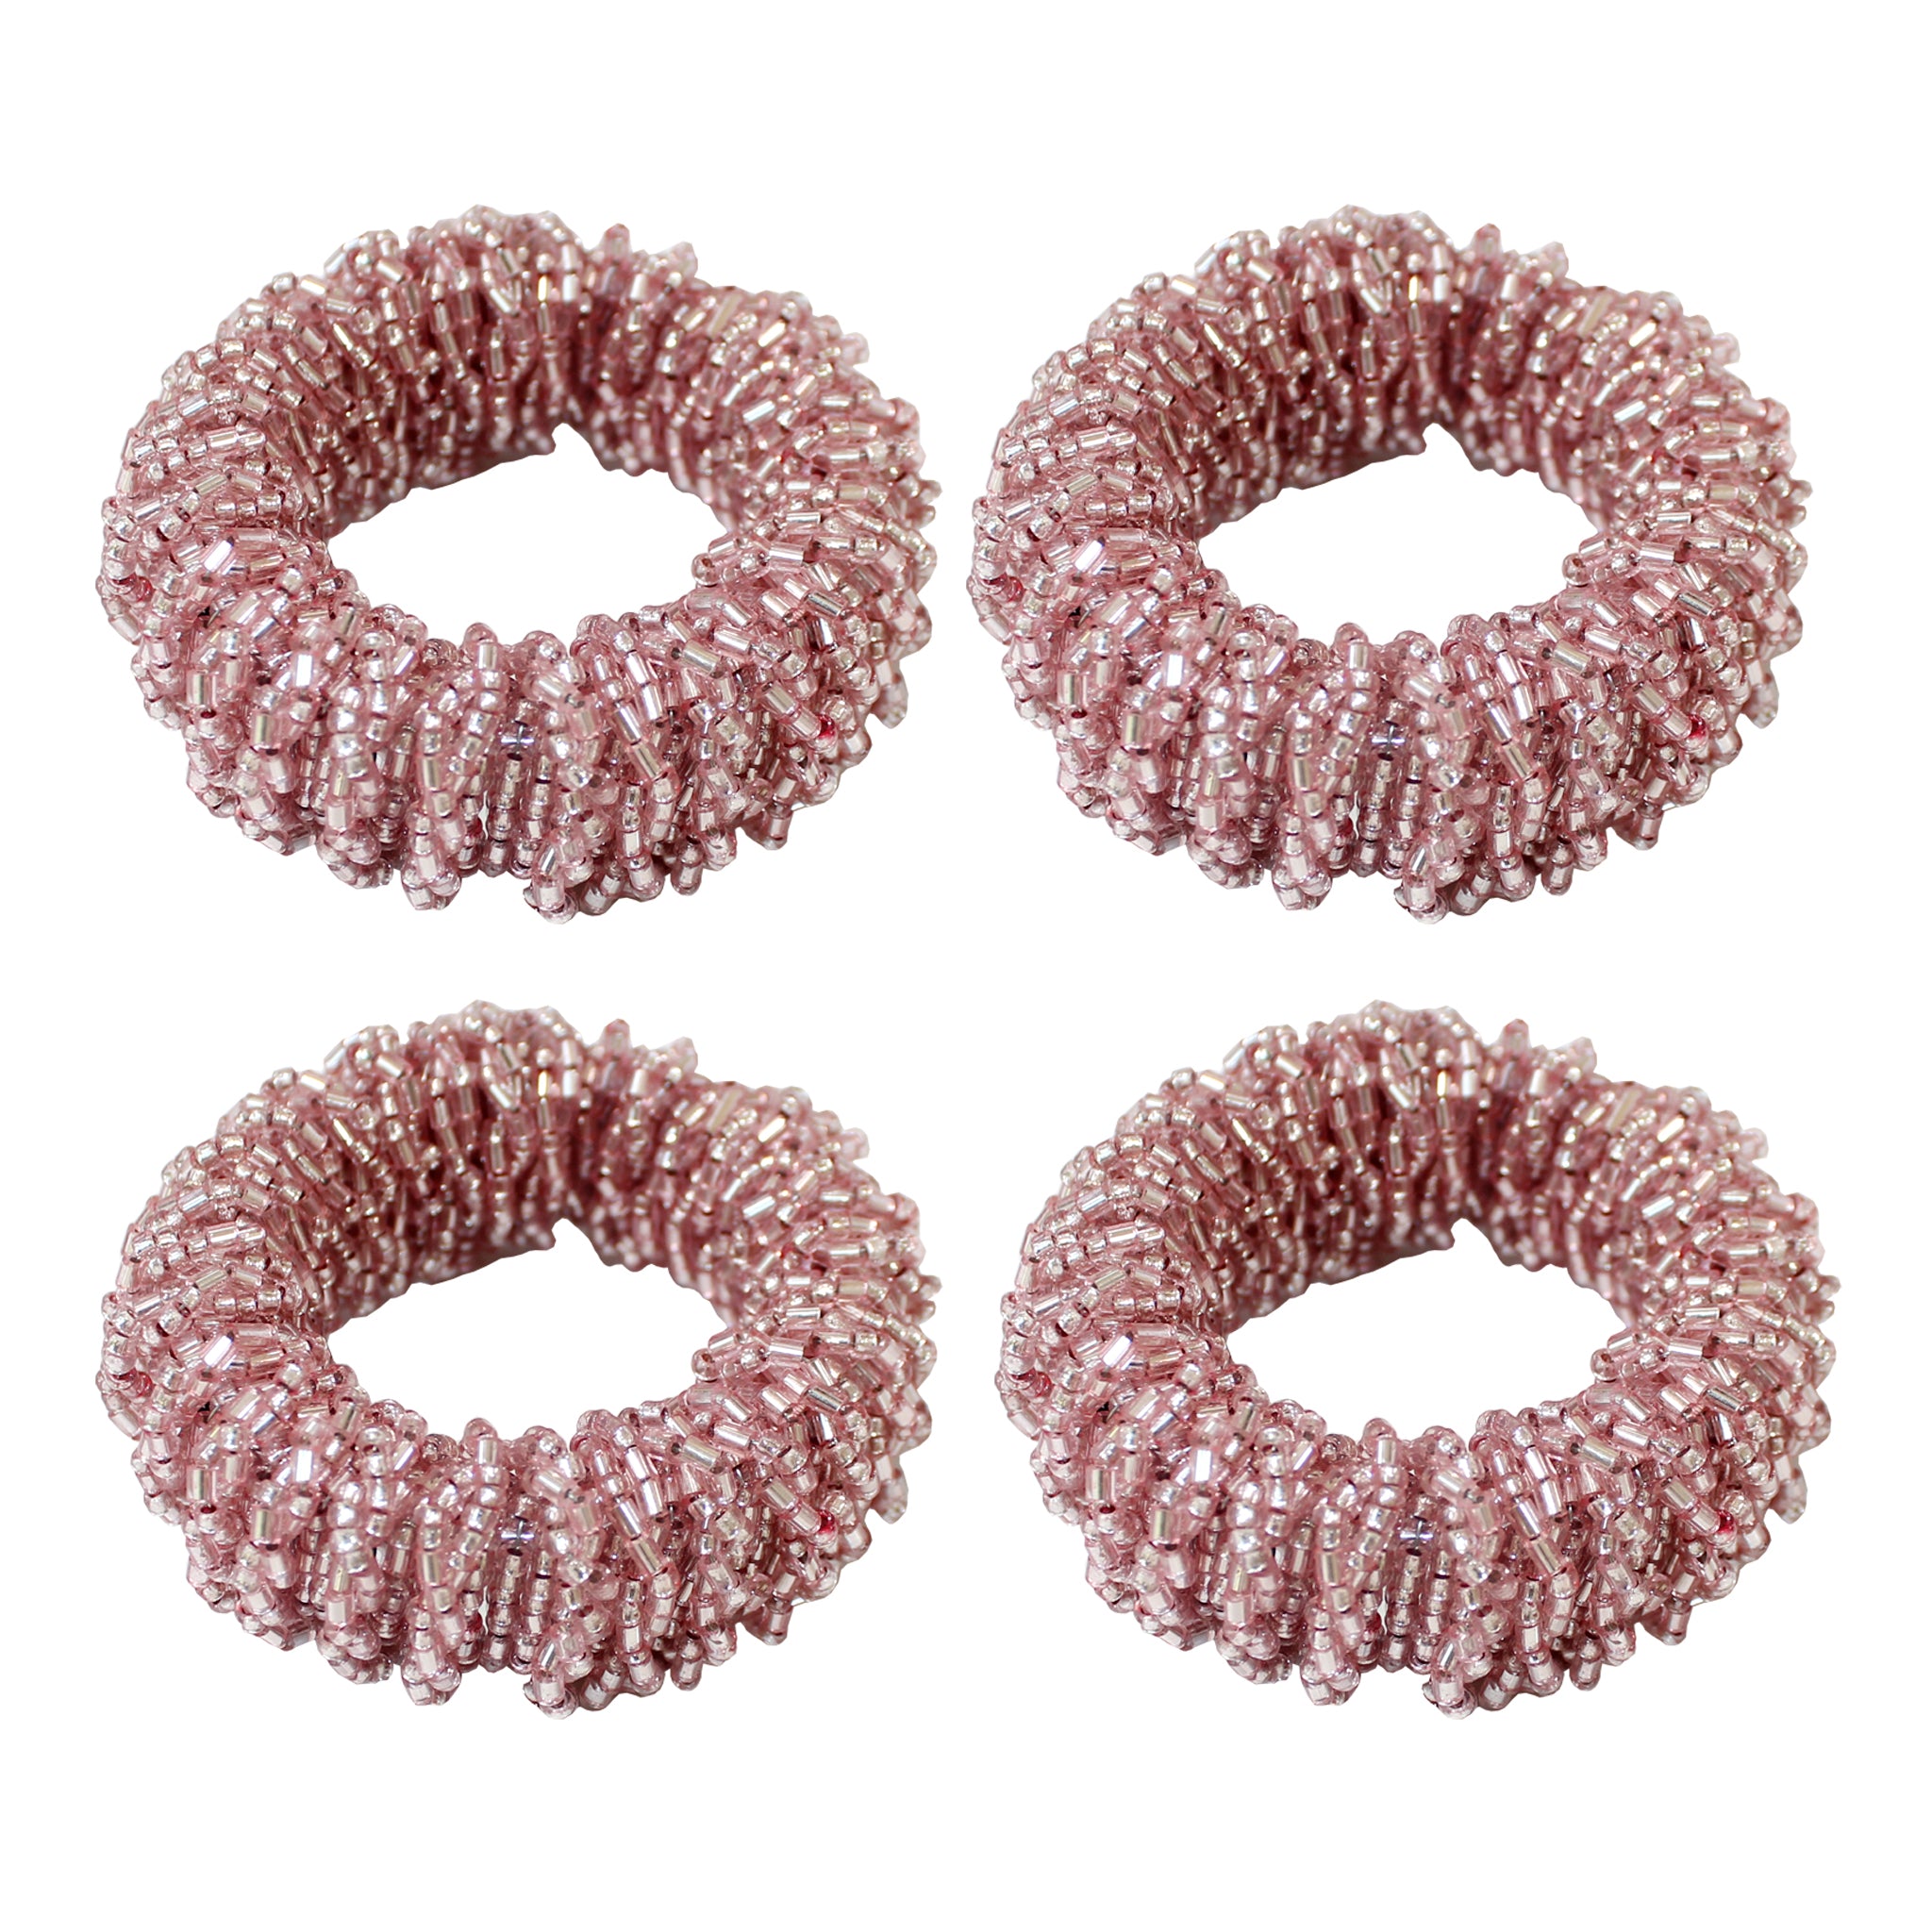 Linen by Trunkin'/ Beaded Napkin Ring Set of 4 / Lt. Pink/2" Dia